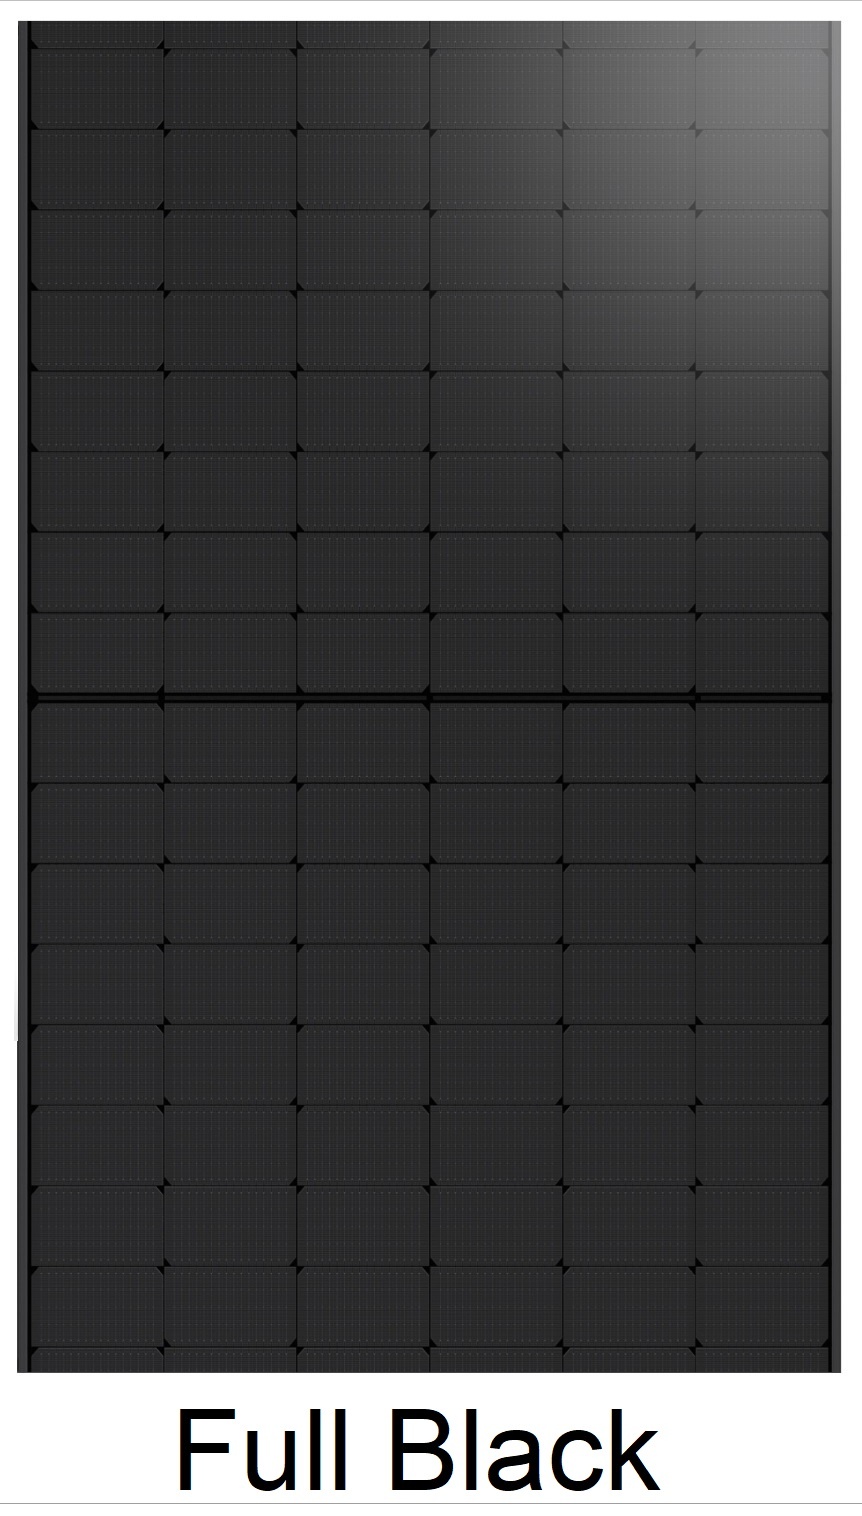 Solar panel set 10 panels 4000W - 5x600W inverter - PV distributor -  Wallbox Discounter